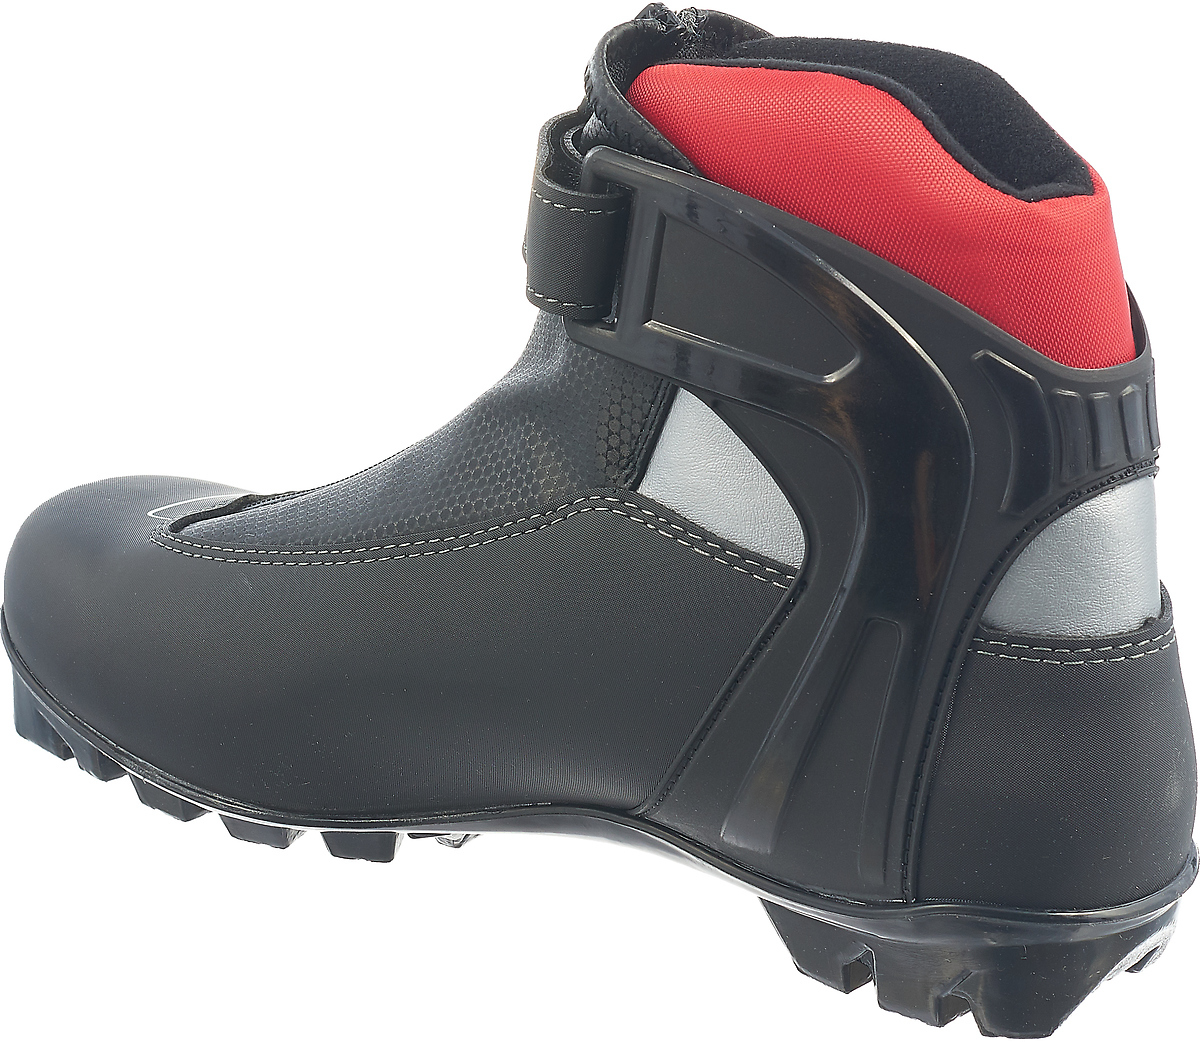 Ботинки спайн купить. Лыжные ботинки спайн. Лыжные ботинки Spine Neo. Ботинки Spine NNN Neo. Ботинки лыжные SNS Spine Pilot Matrix Carbon Pro 194k.